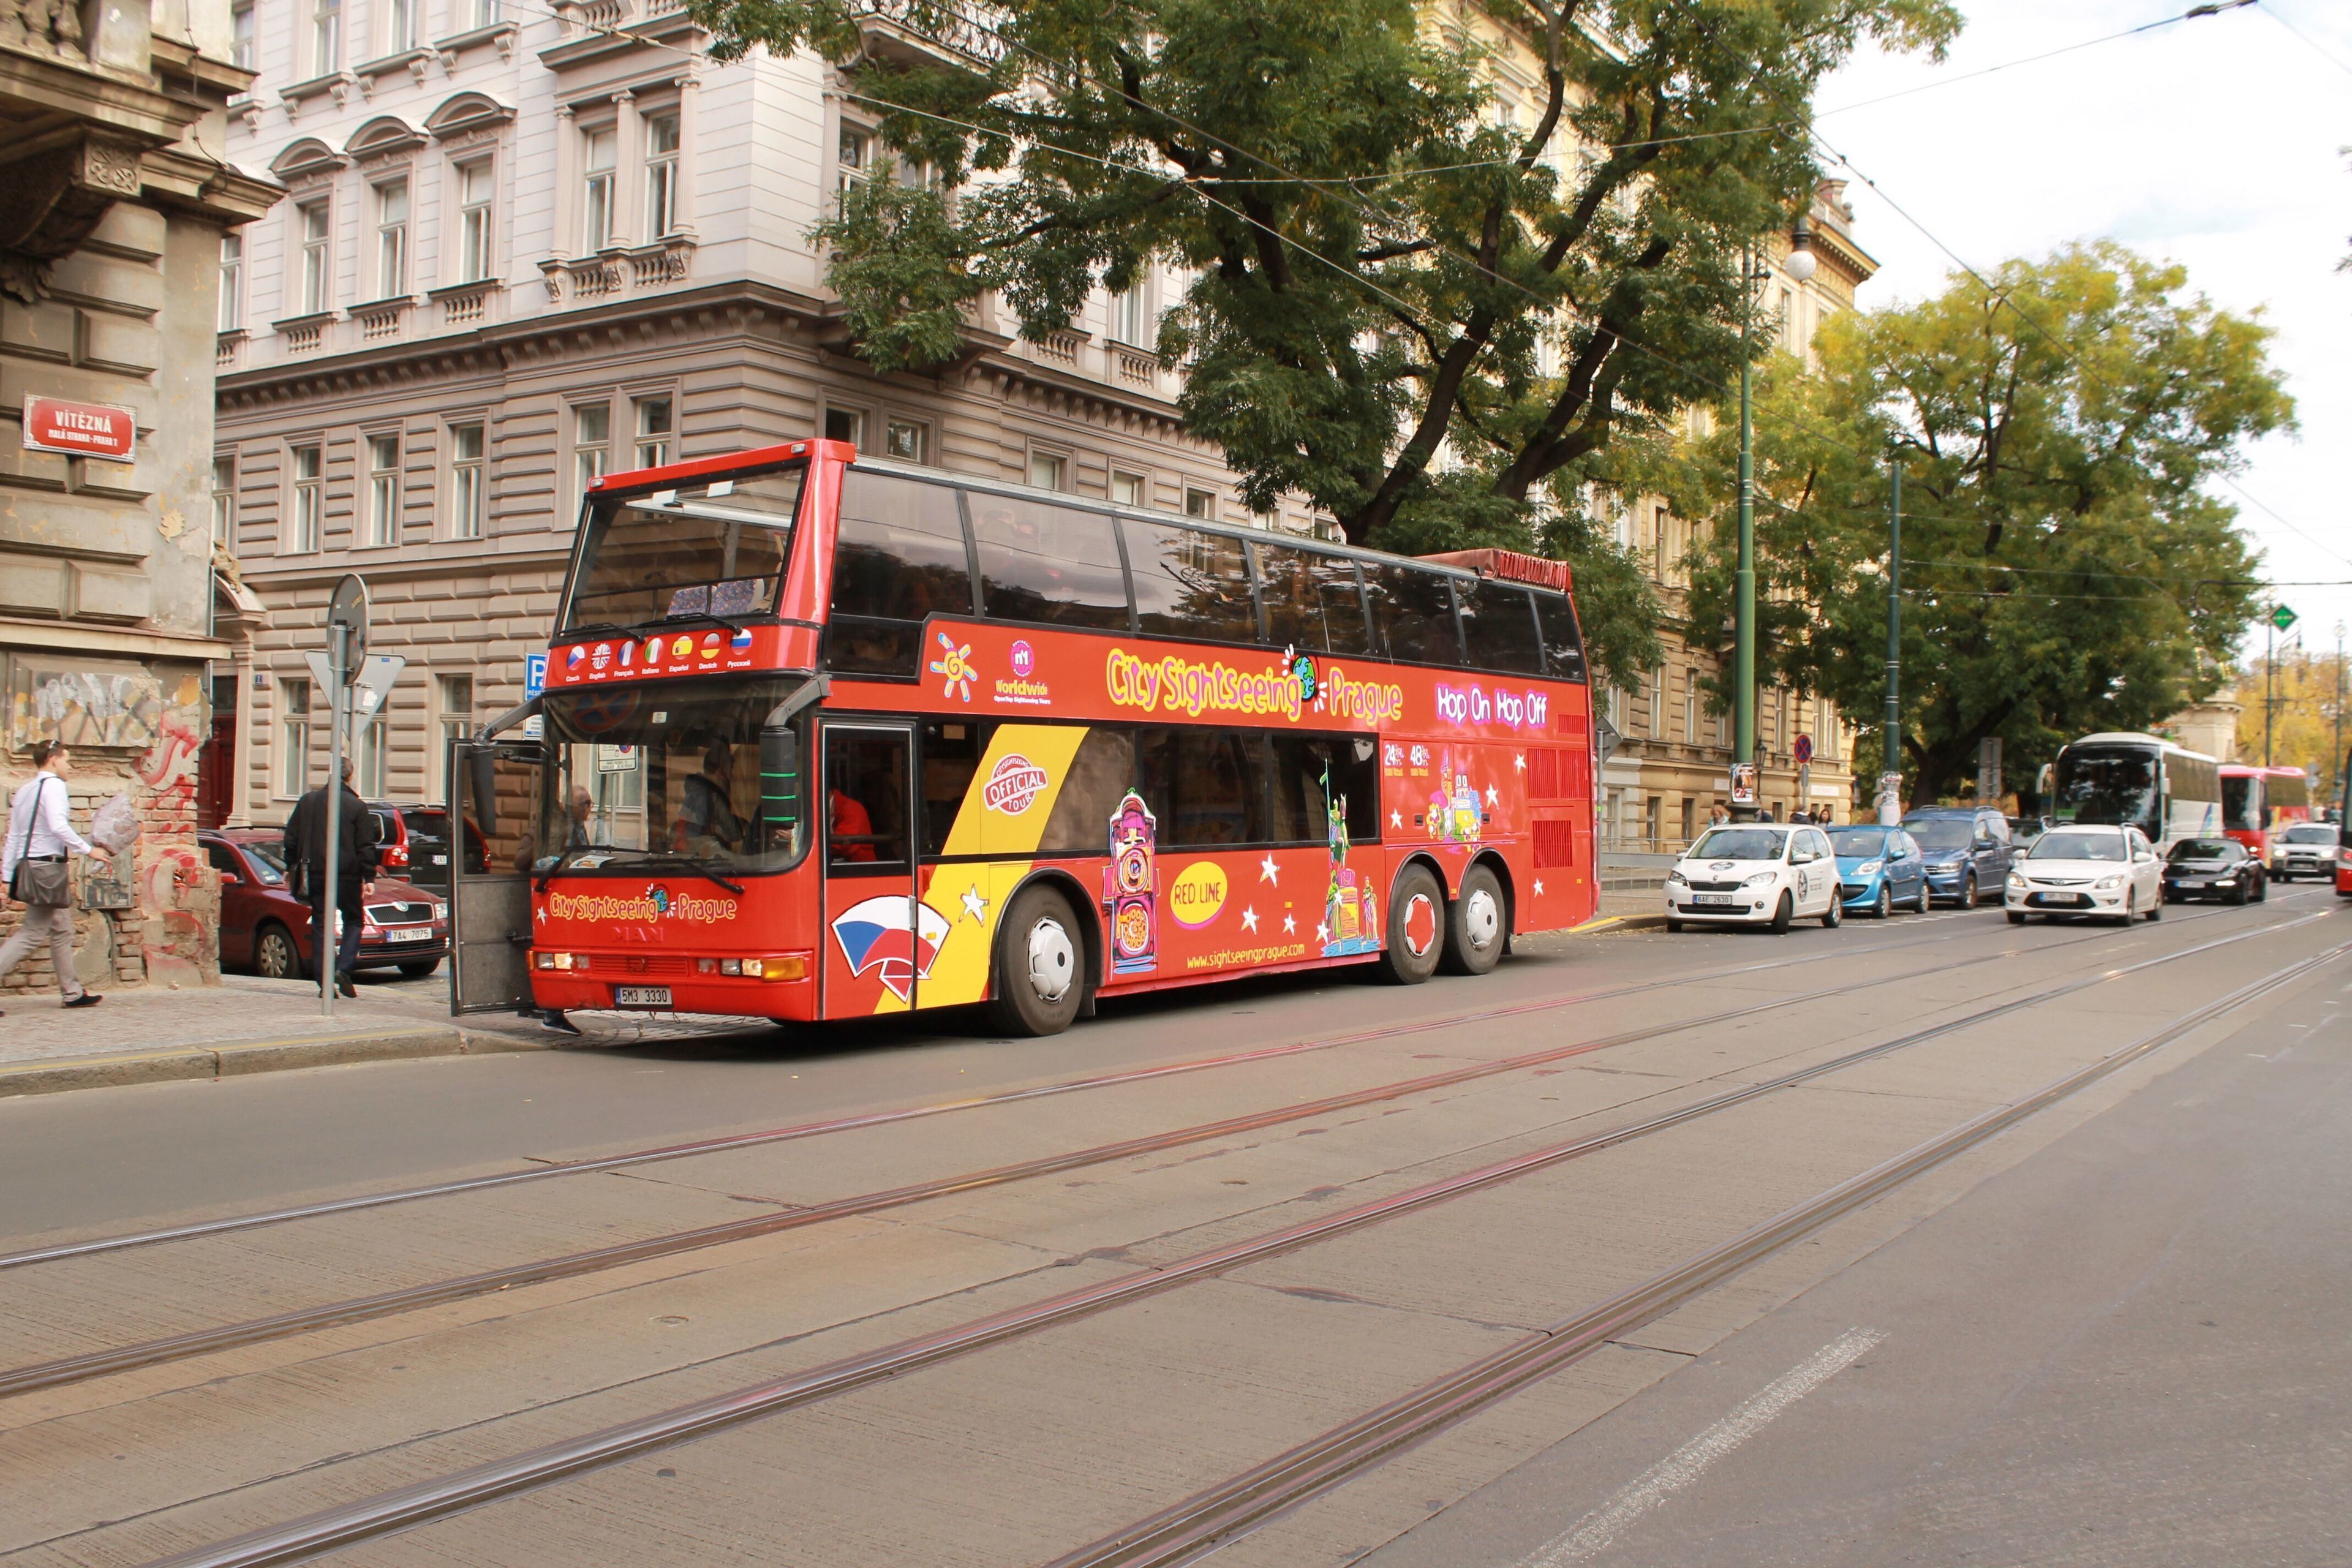 Prague HopOn HopOff Bus Tour + Choice of Attractions